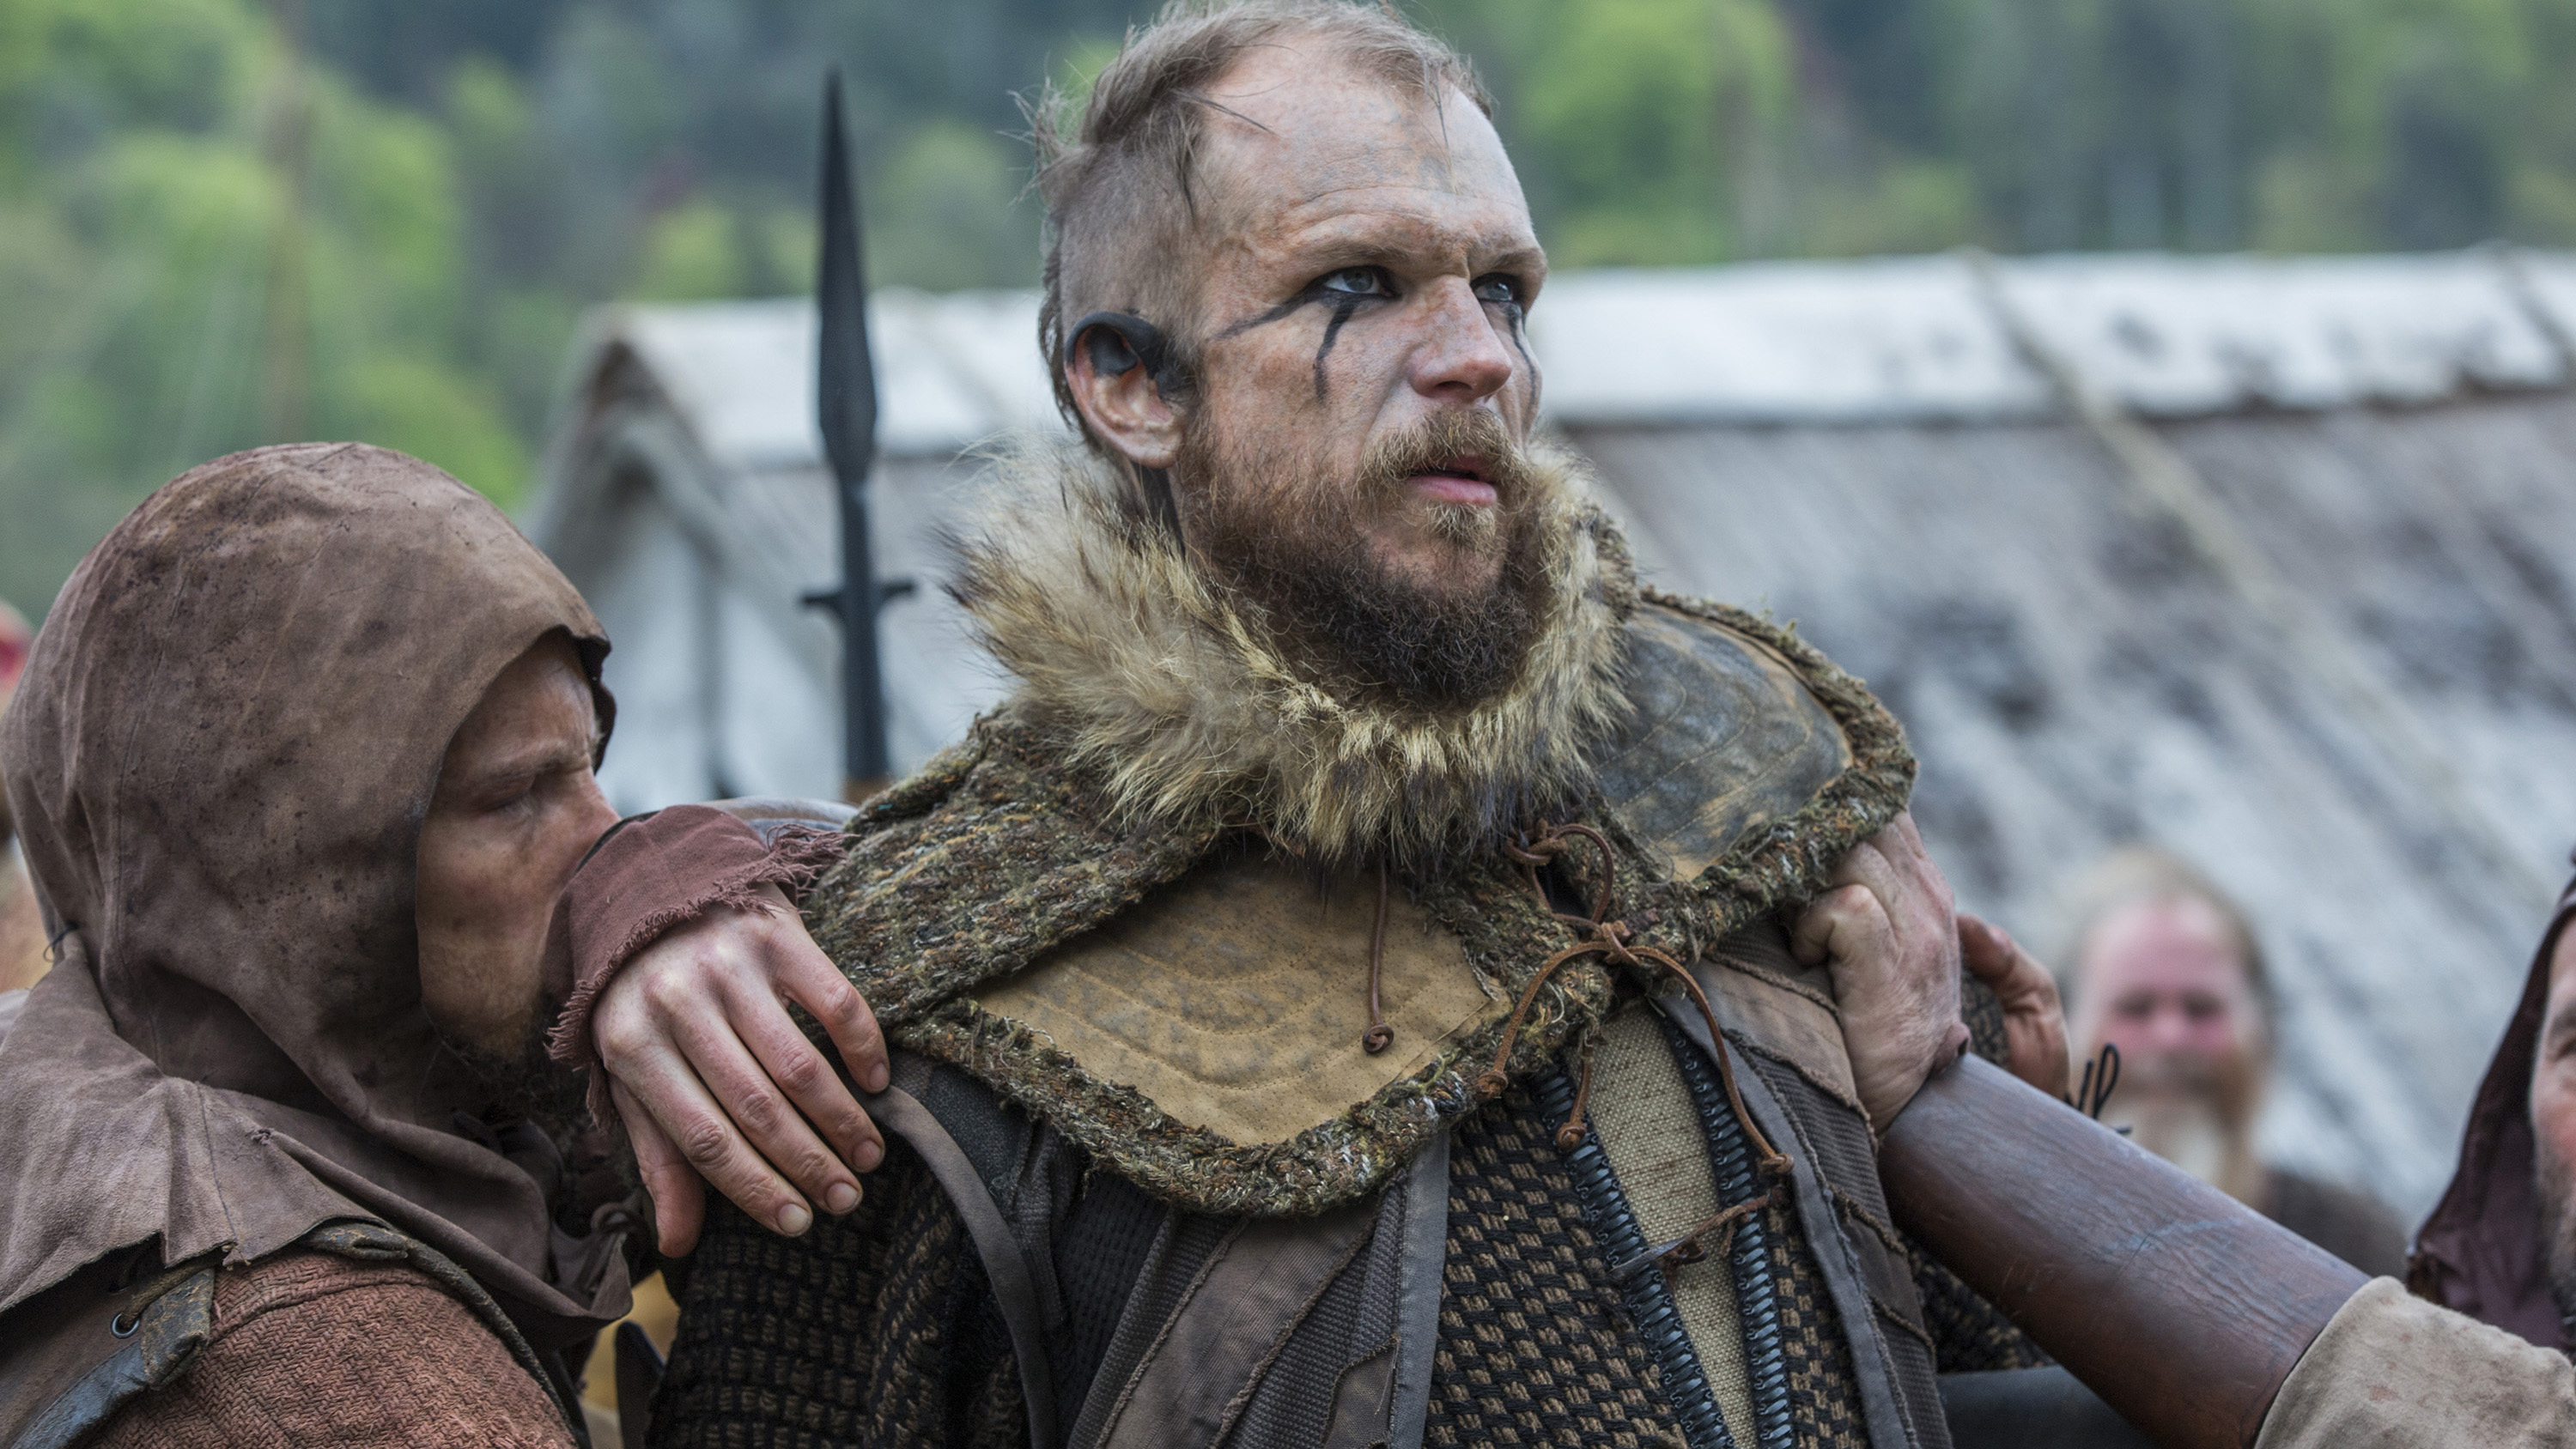 Vikings The Great Army (TV Episode 2017) - IMDb